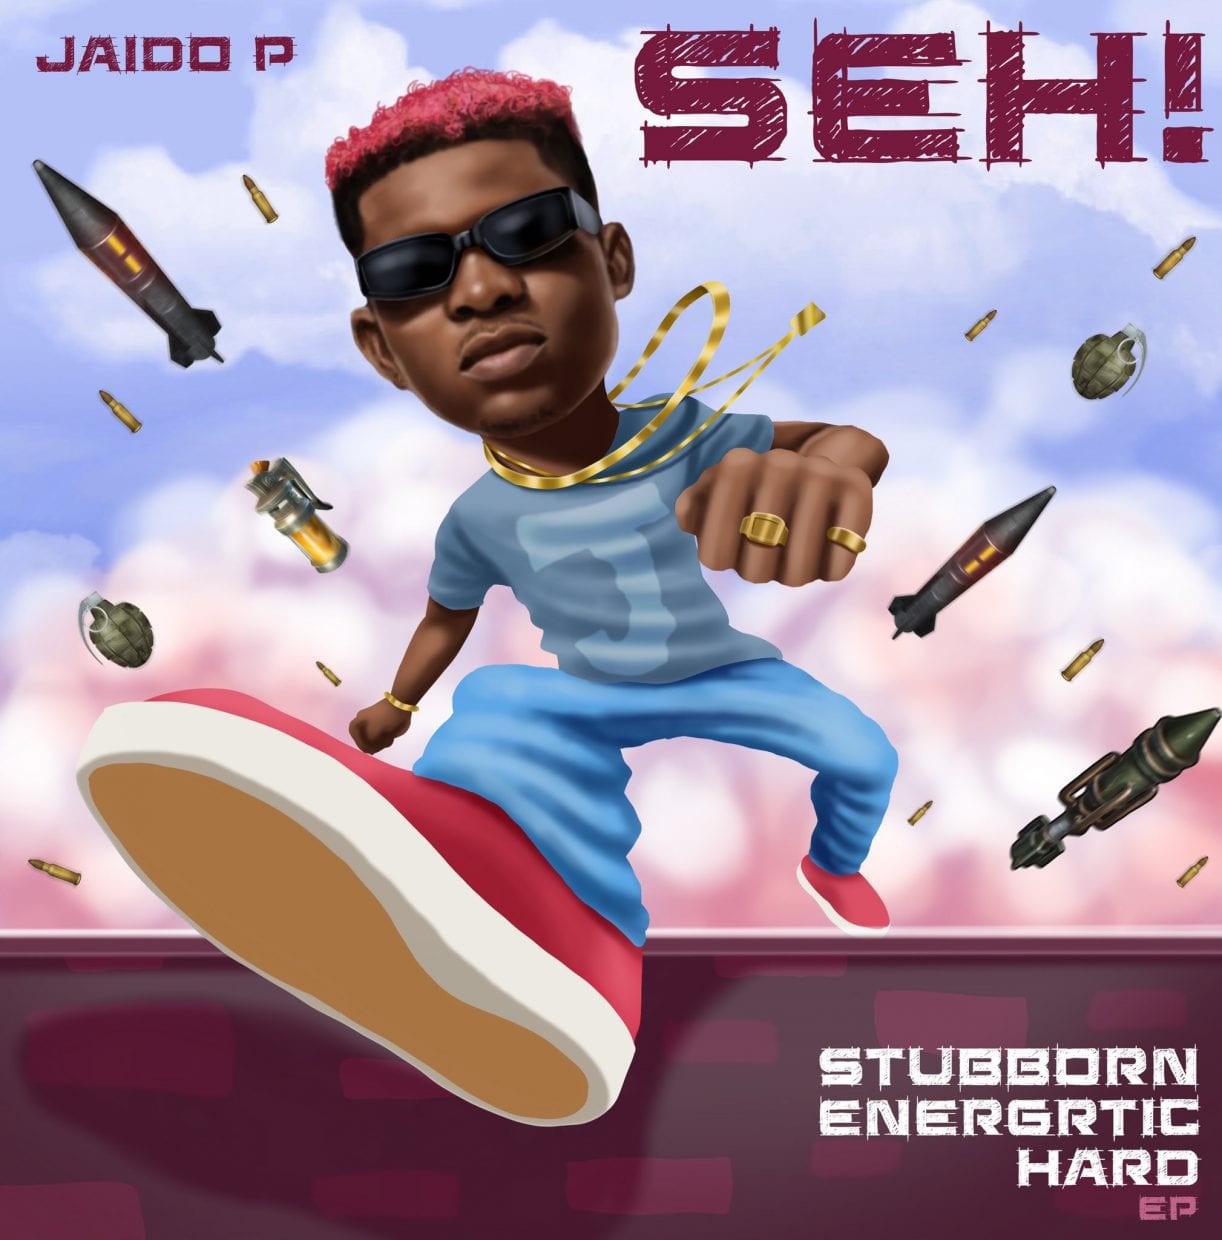 Jaido P - SEH! "Stubborn Energetic Hard" EP (Album)